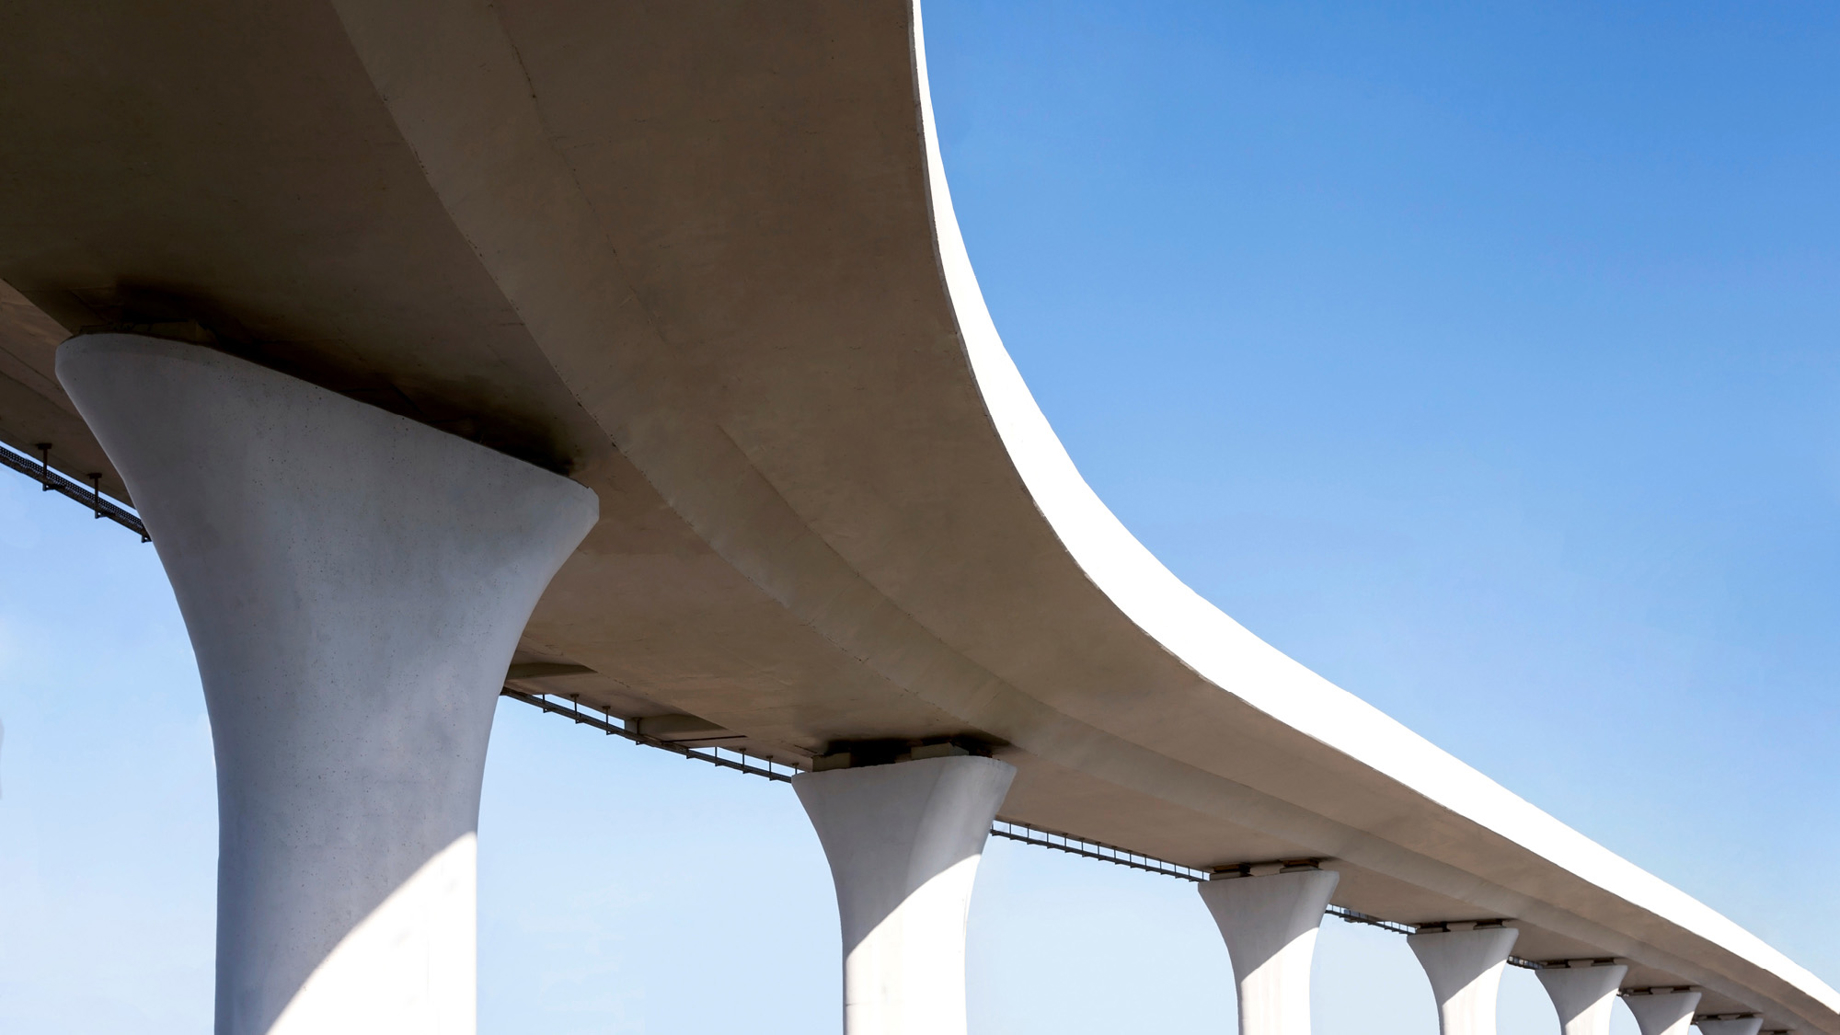 A bridge structure. Credit: Getty Images